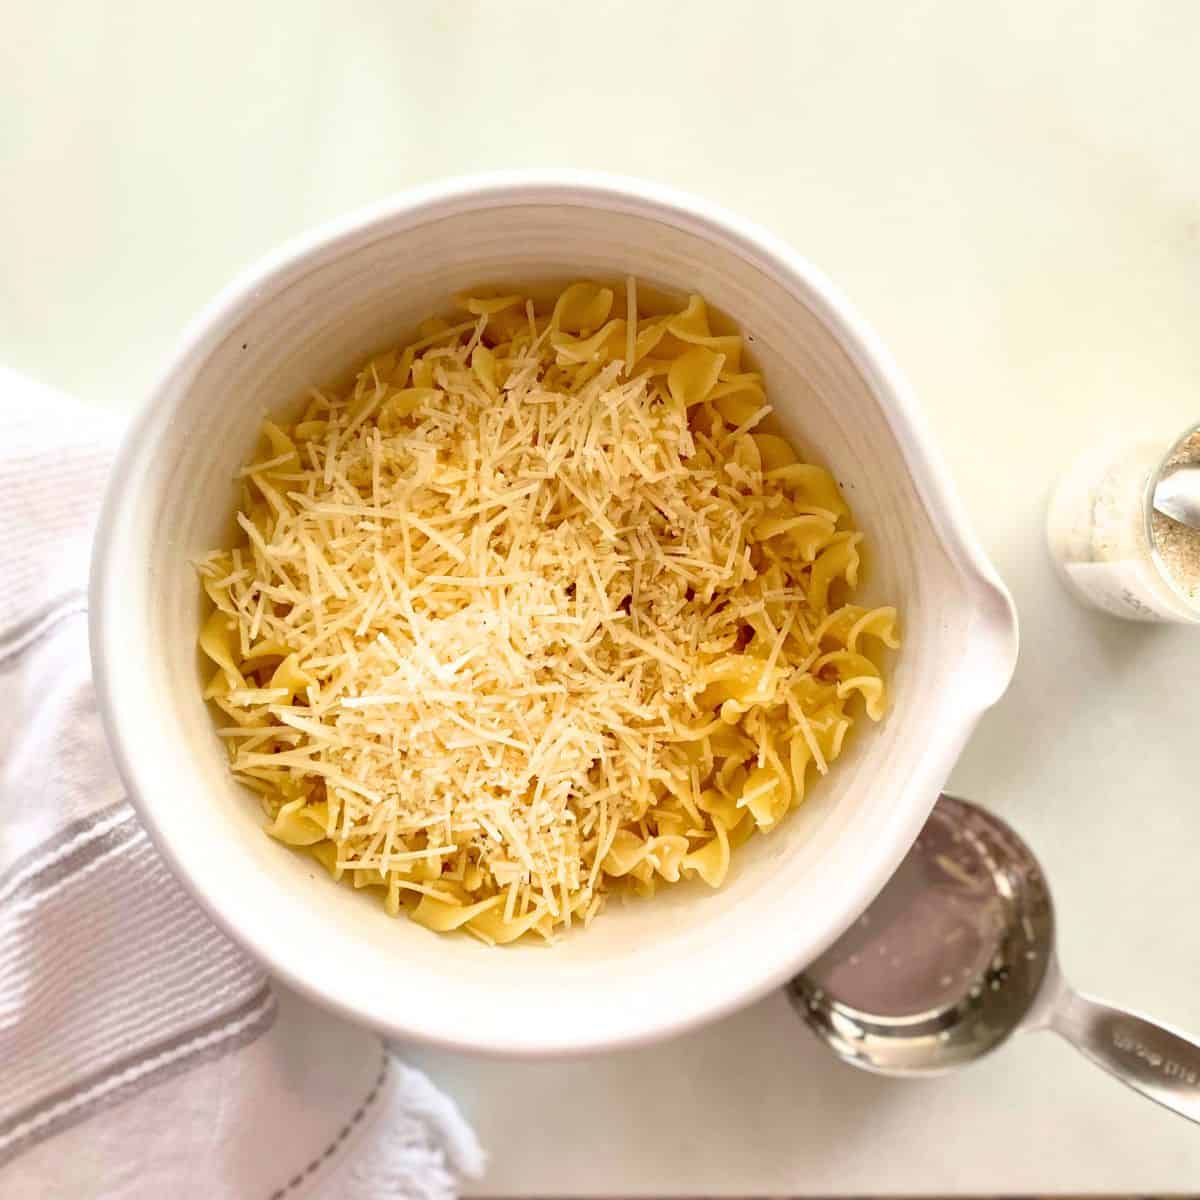 Parmesan atop garlic buttered noodles